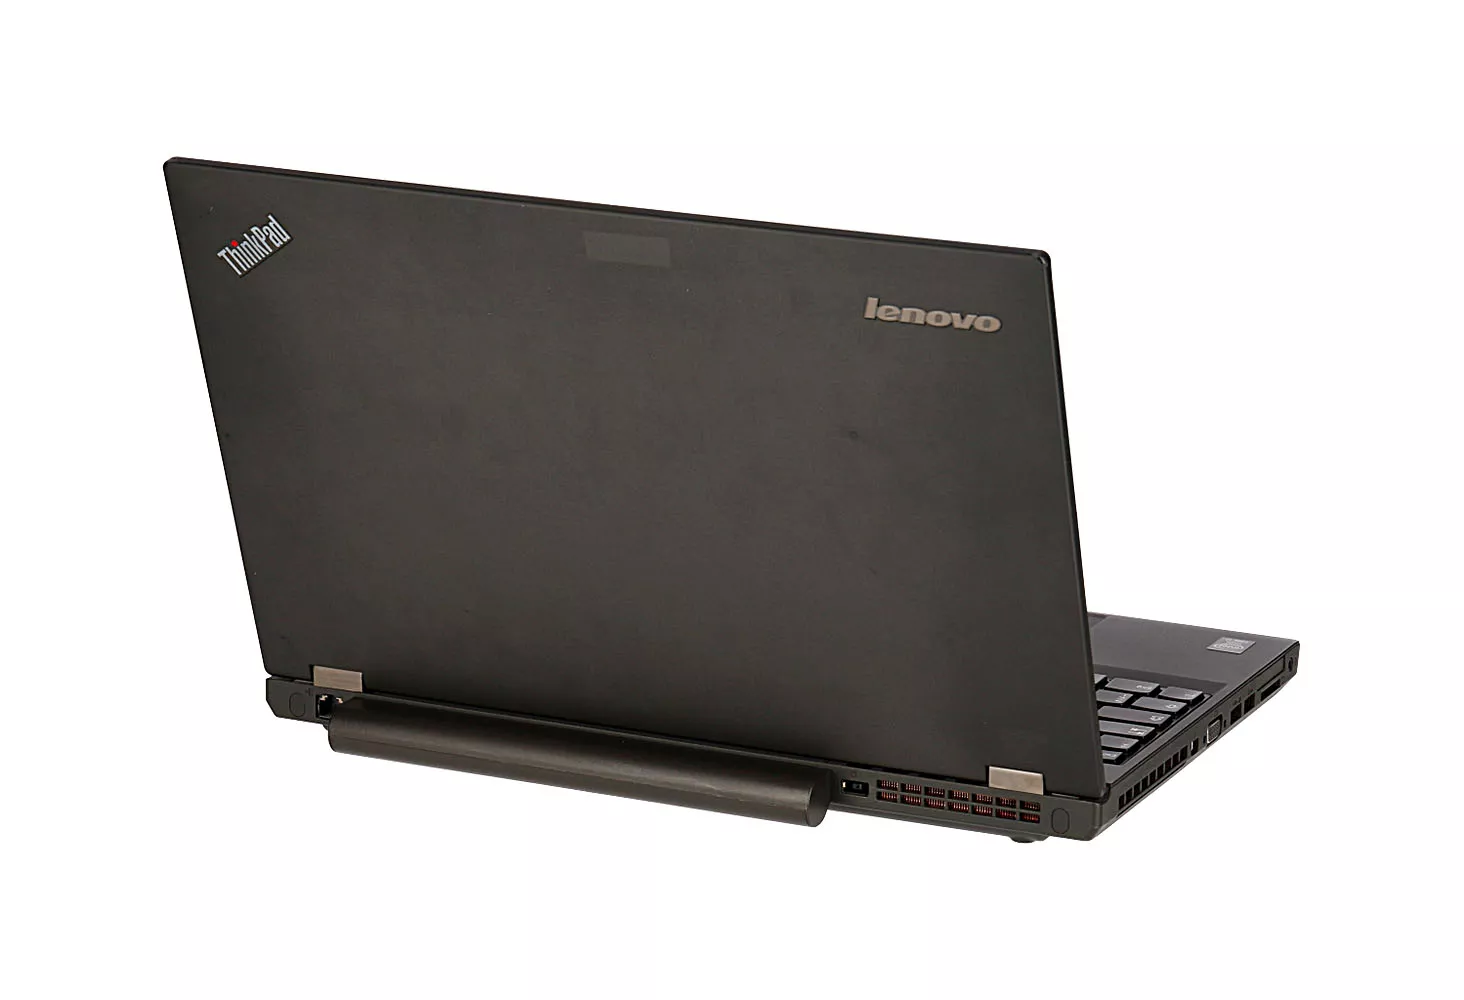 Lenovo ThinkPad W541 Quad Core i7 4810QM 2,8 GHz Webcam